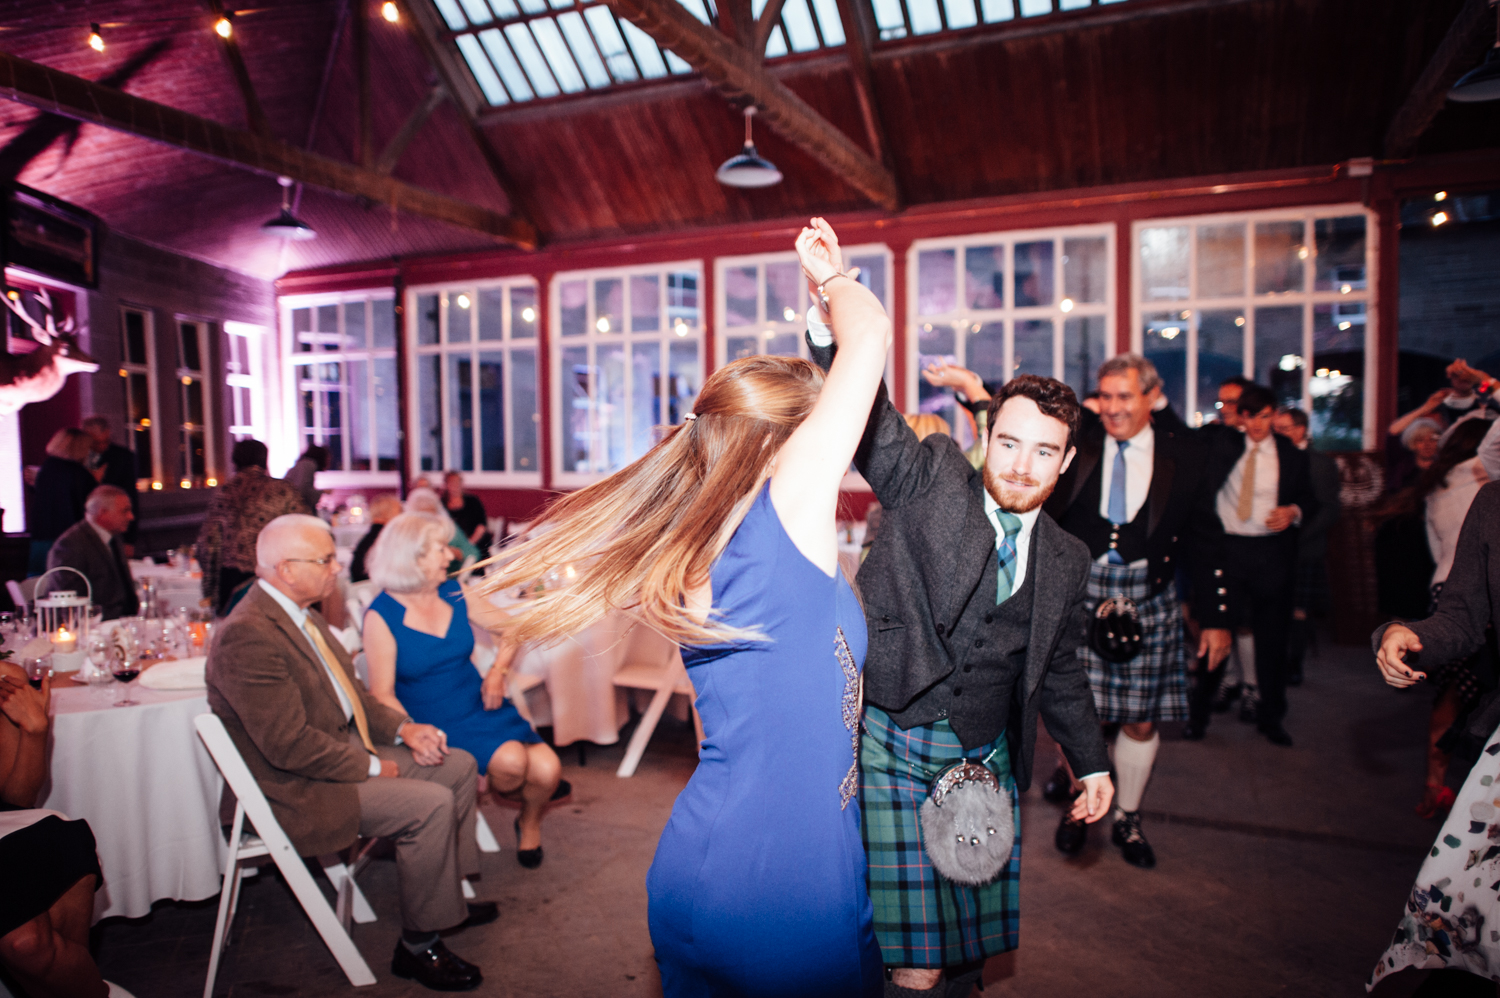 184-lisa-devine-photography-alternative-creative-wedding-photography-glasgow-errol-park-perthshire-scotland-uk.JPG